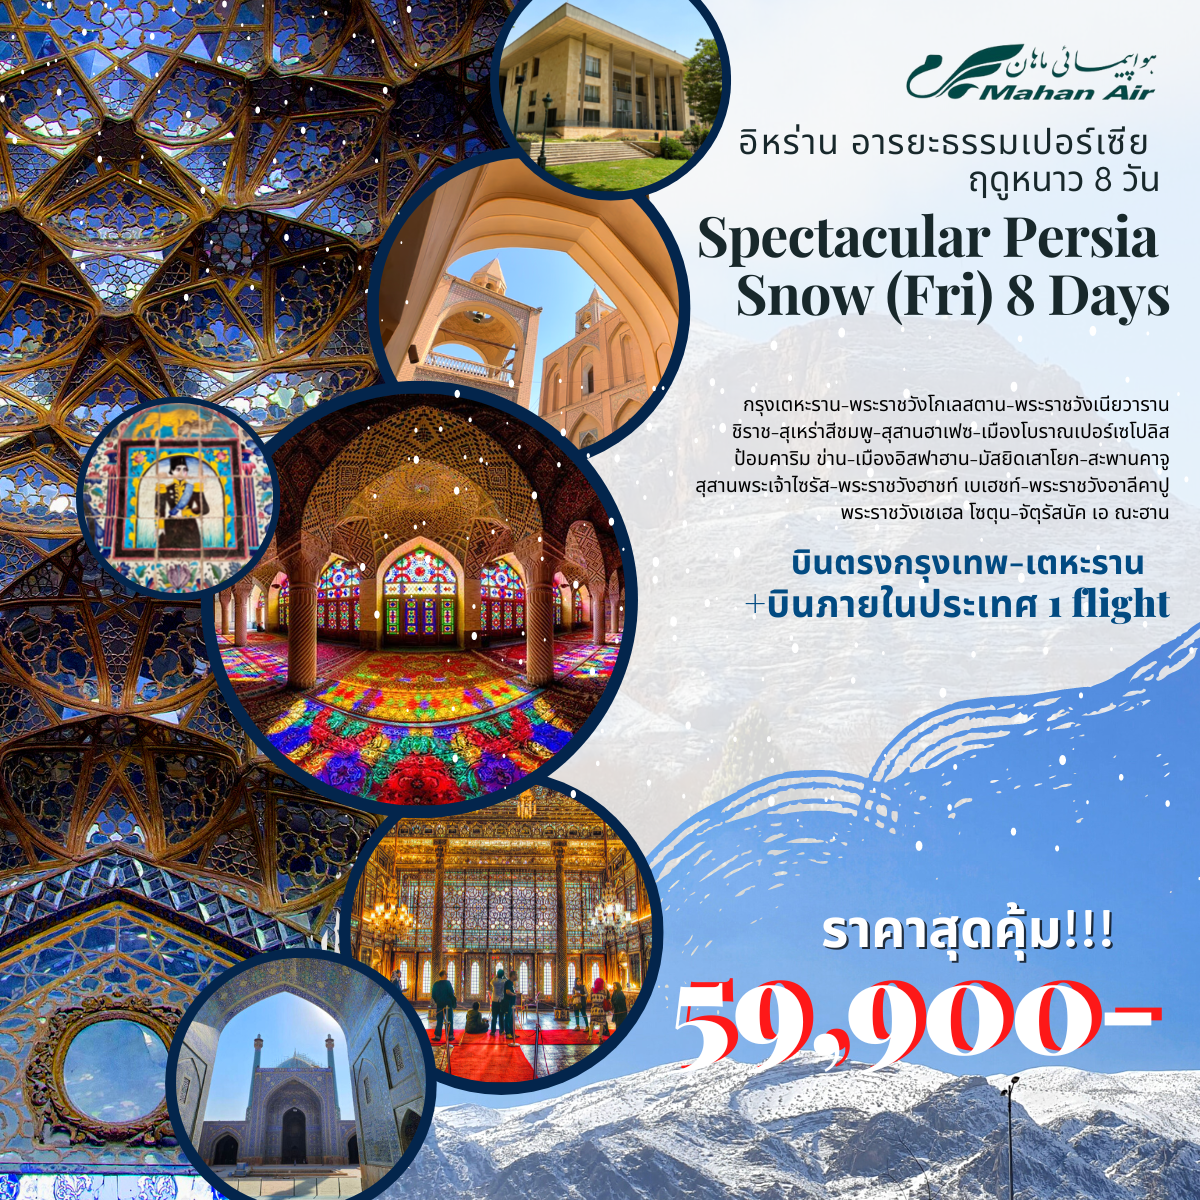 Spectacular Persia Snow 8 Days 6 Nights อิหร่าน อารยะธรรมเปอร์เซีย ฤดูหนาว 8 วัน